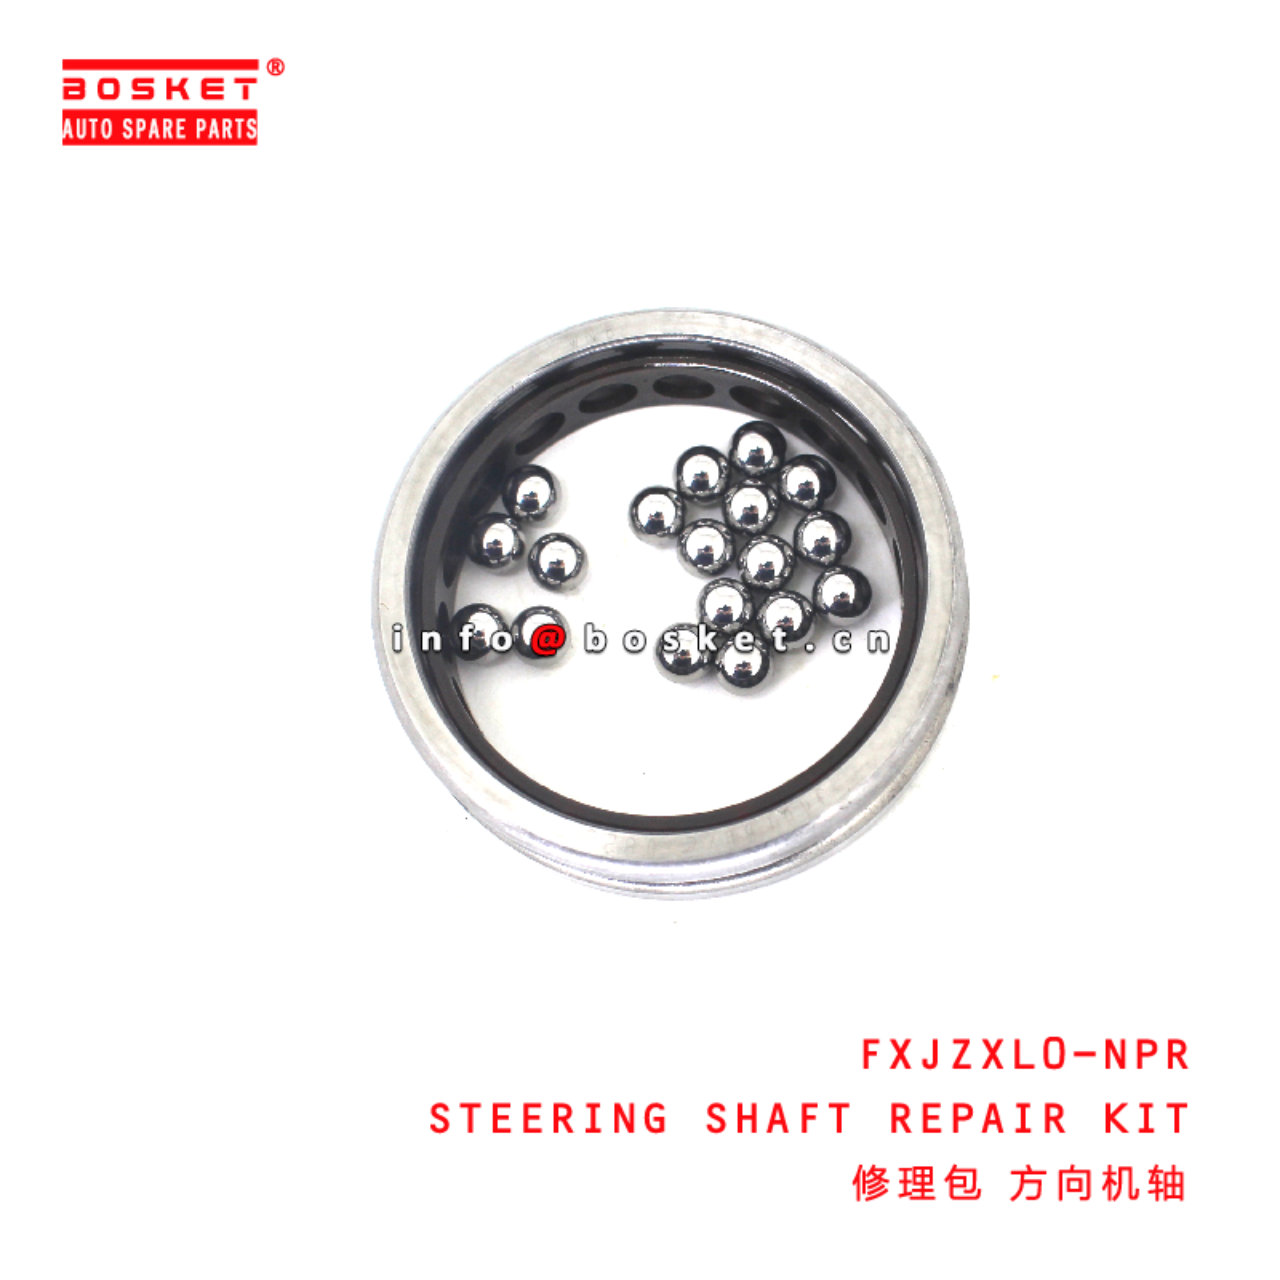 FXJZXL0-NPR Steering Shaft Repair Kit suitable for ISUZU NPR  FXJZXL0-NPR